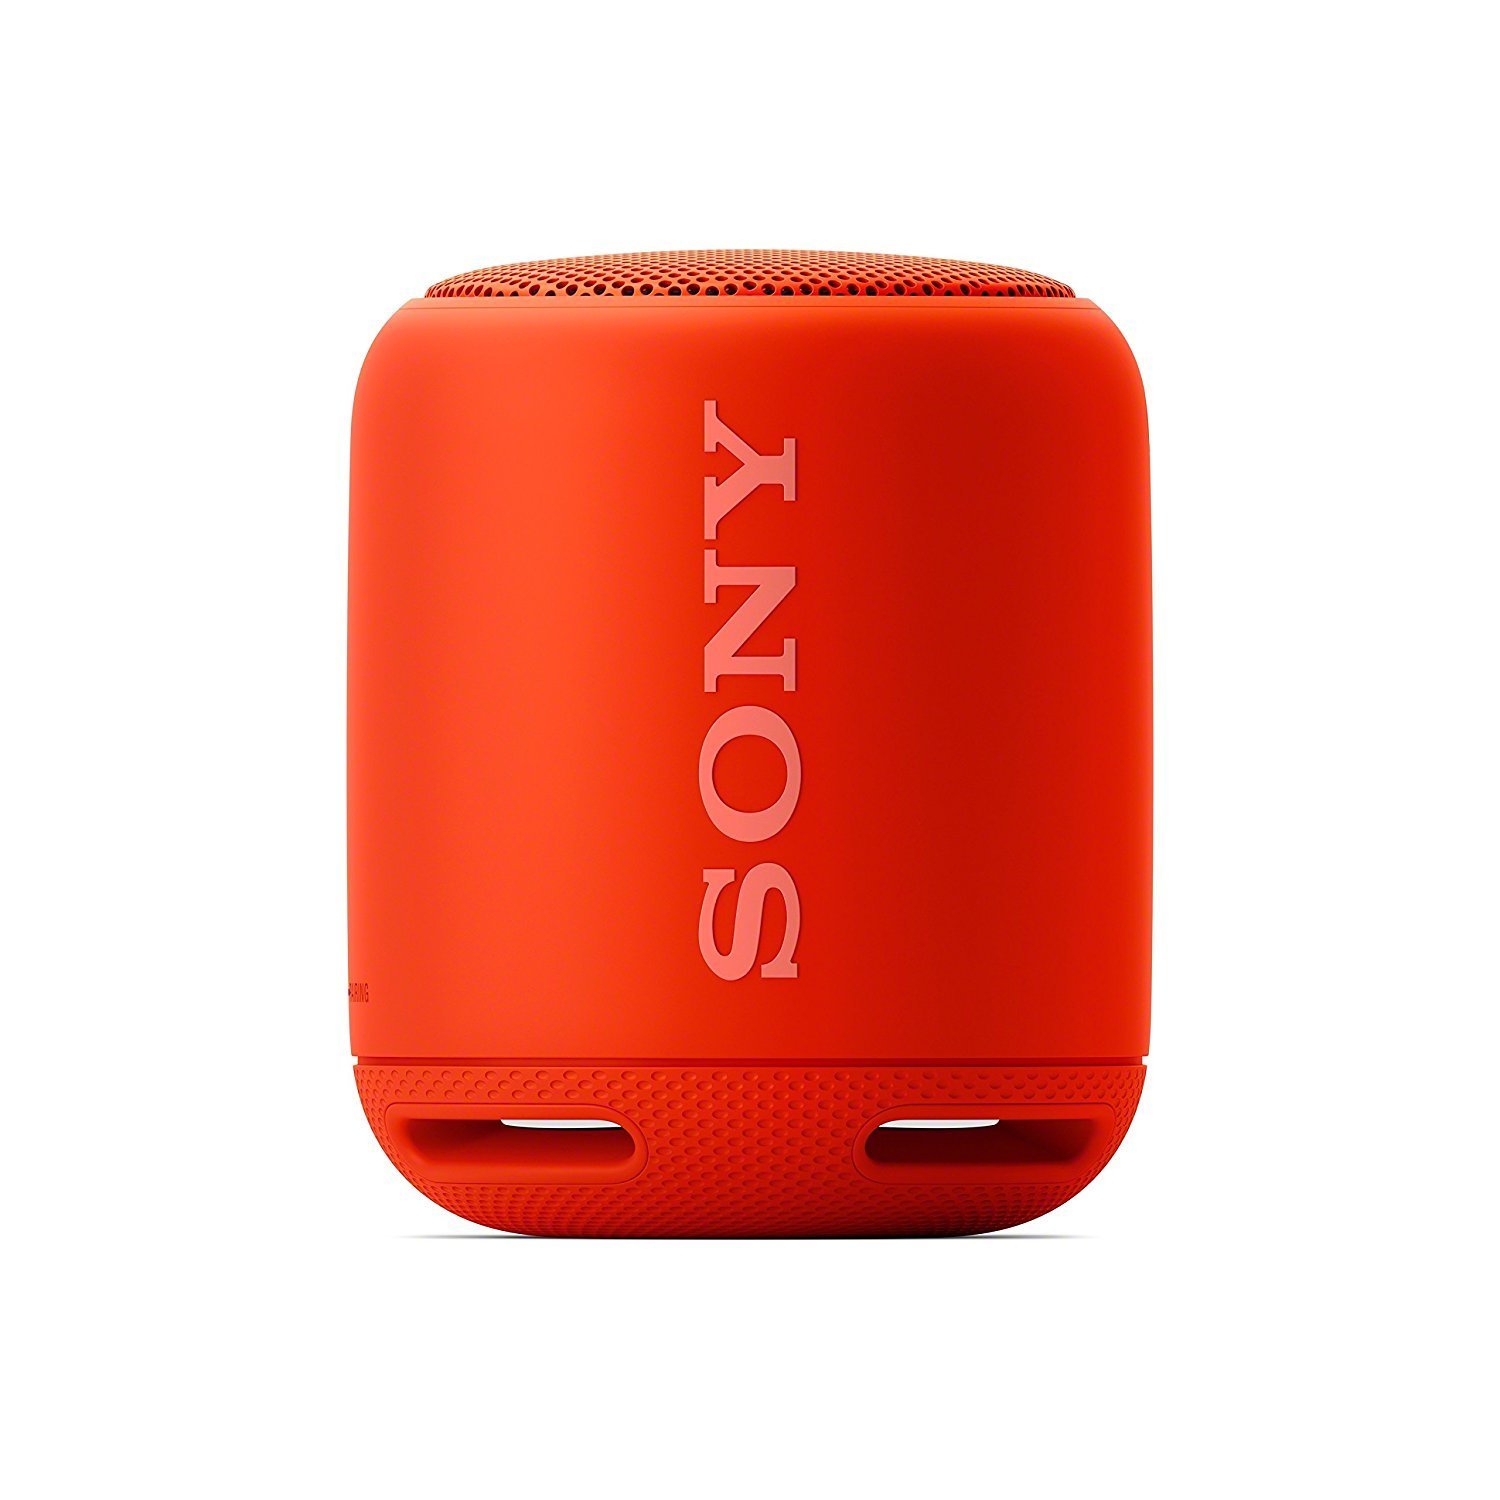 Sony XB10 Portable Wireless Speaker Waterproof with Bluetooth, RED